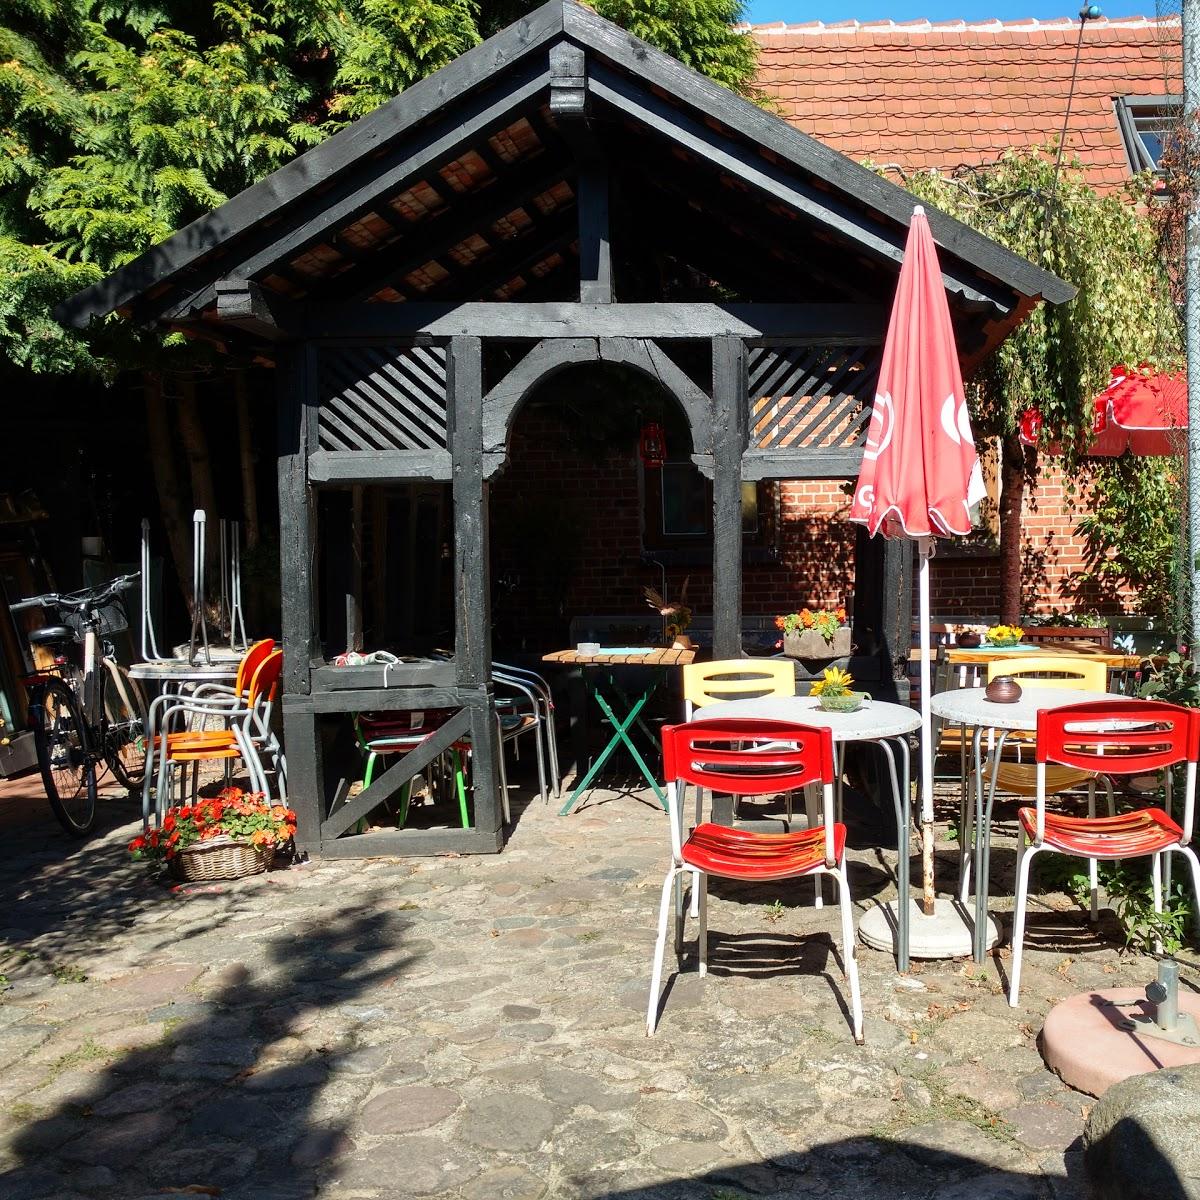 Restaurant "Papazitos" in Lübz